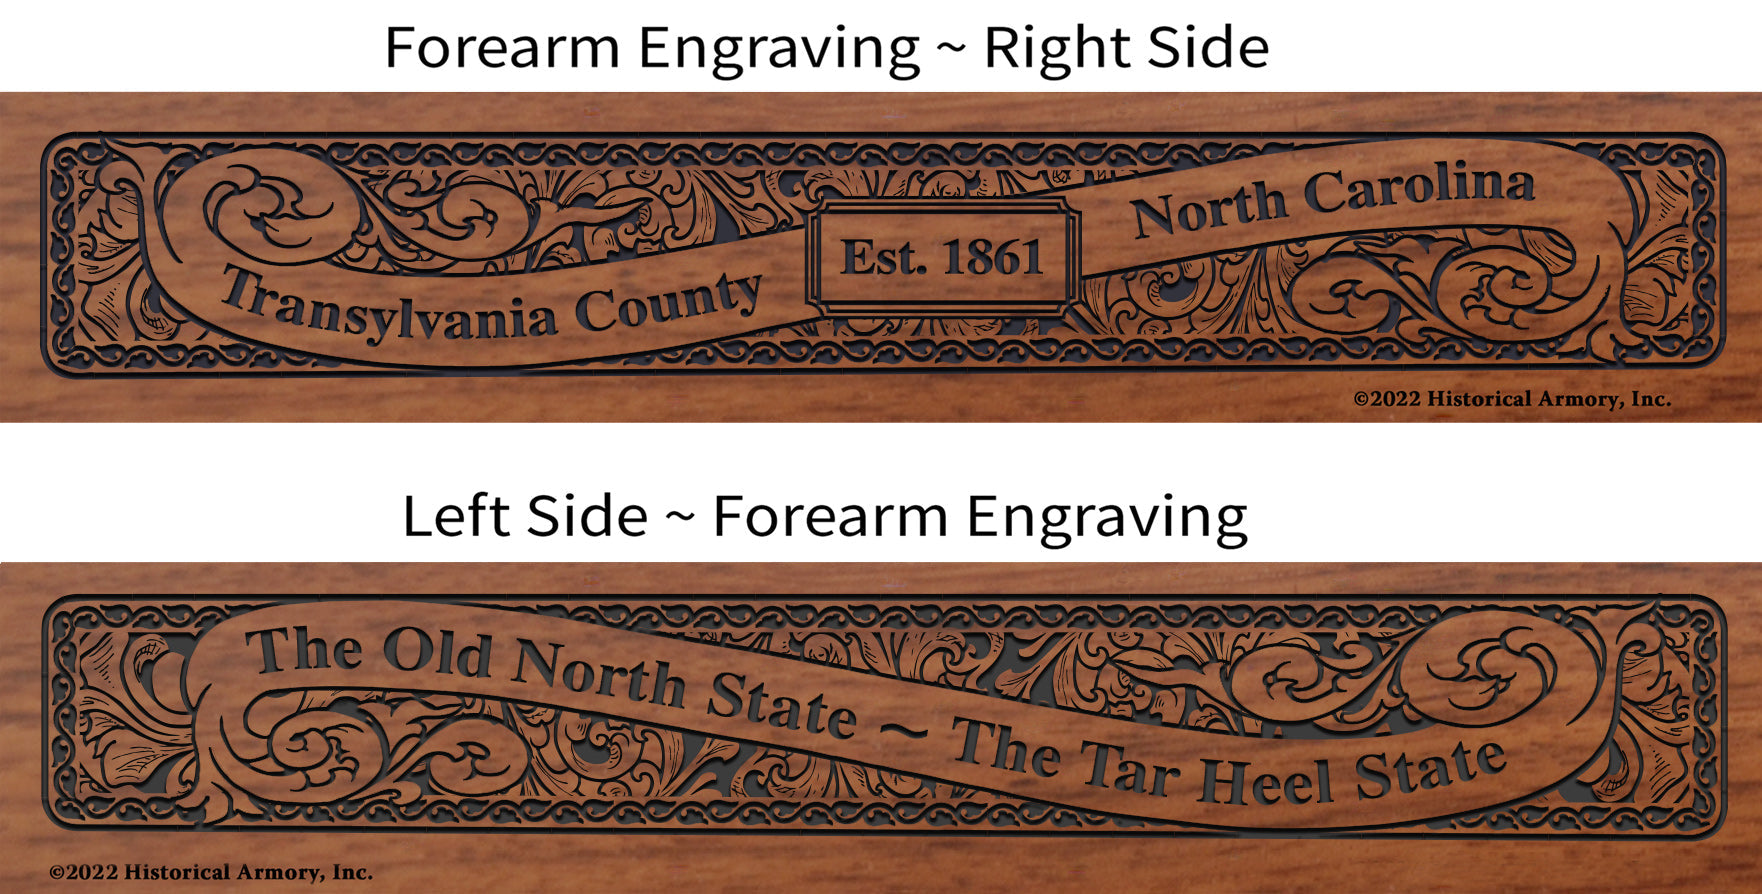 Transylvania County North Carolina Engraved Rifle Forearm